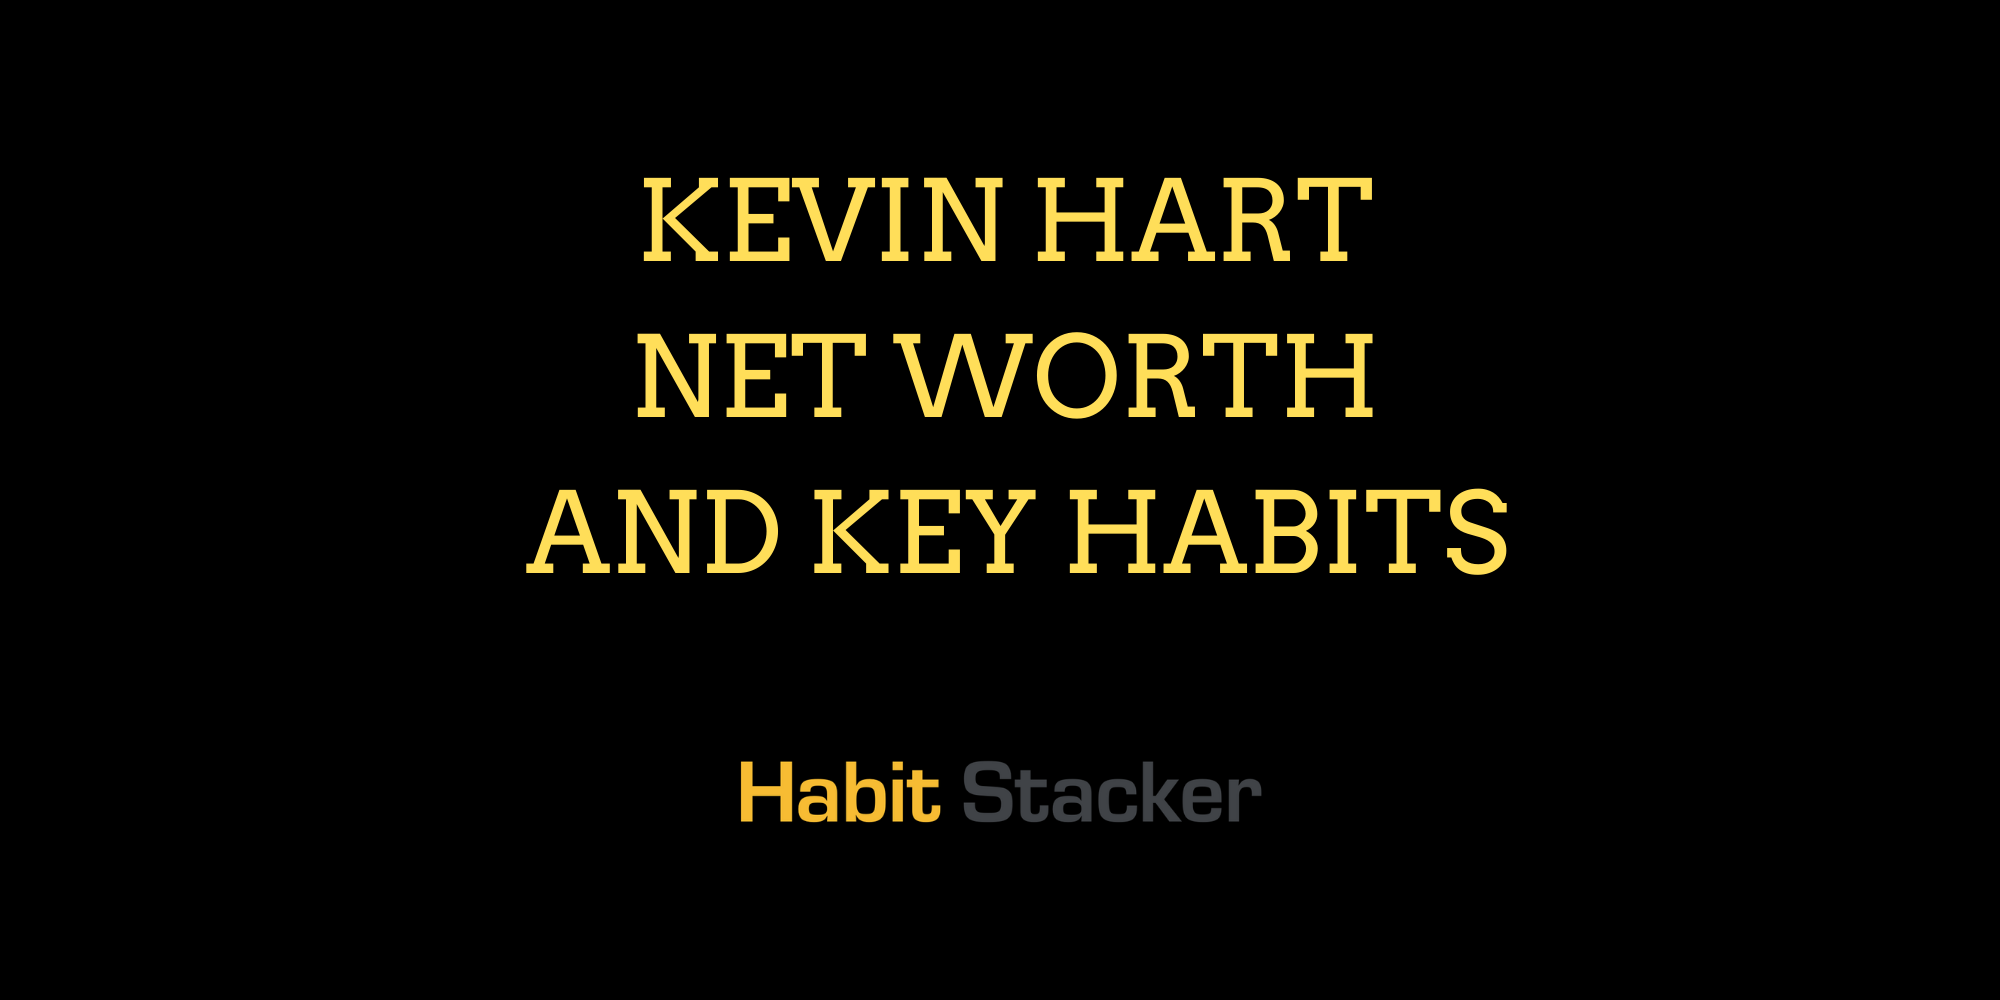 Kevin Hart Net Worth and Key Habits